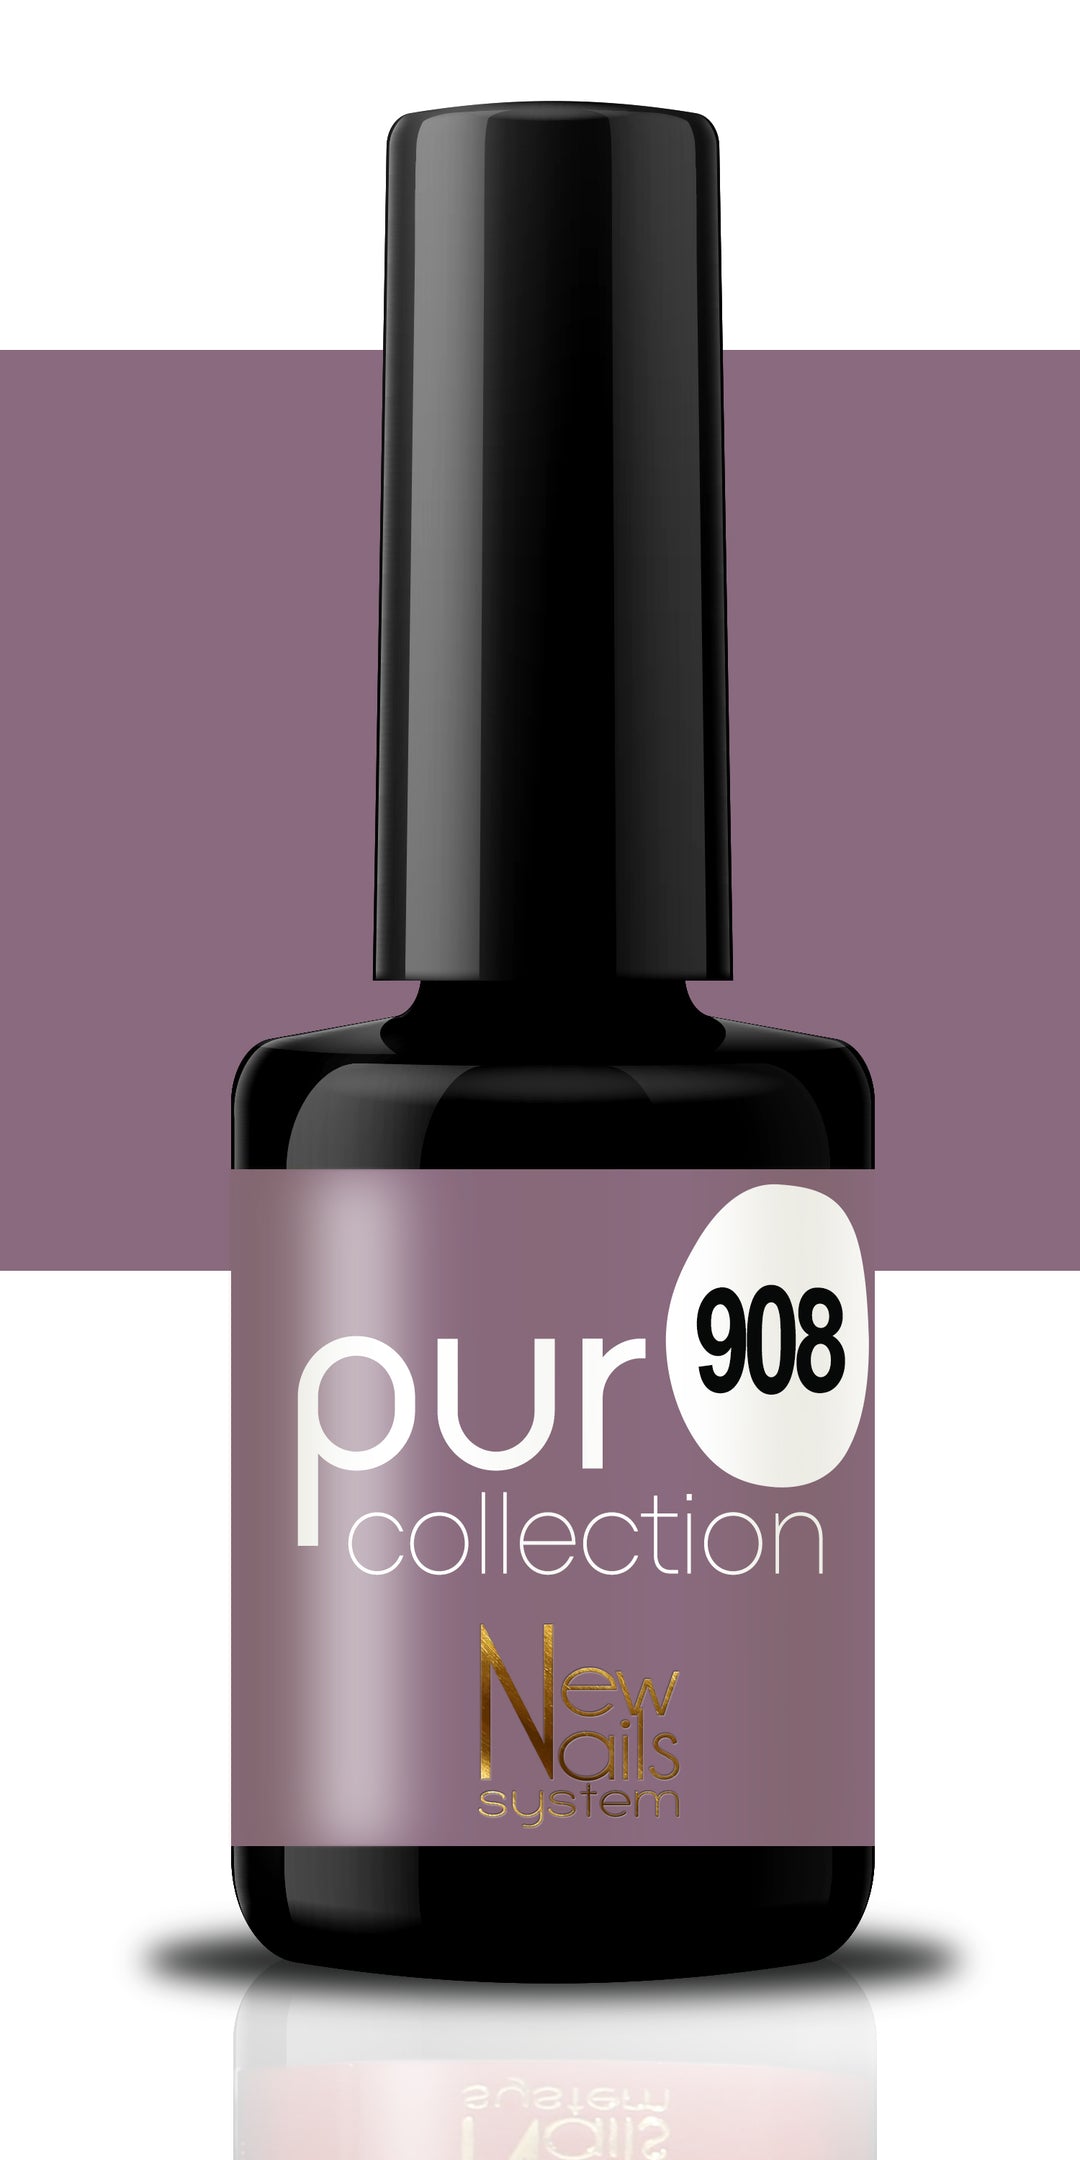 Puro collection Cardigan 908 polish gel 5ml